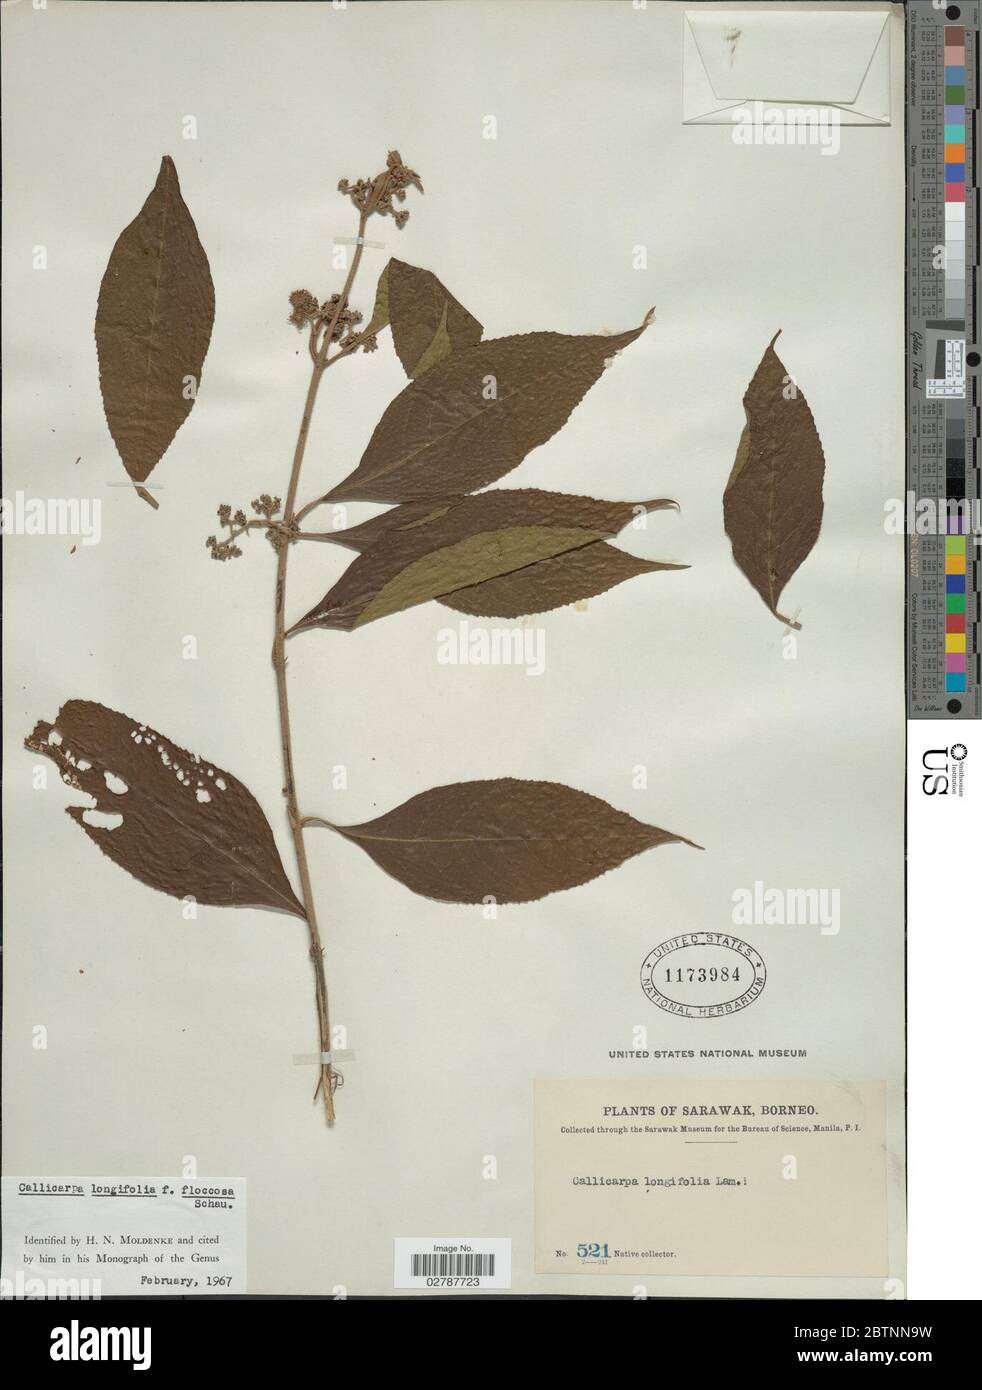 Callicarpa longifolia f floccosa Schauer. Stock Photo